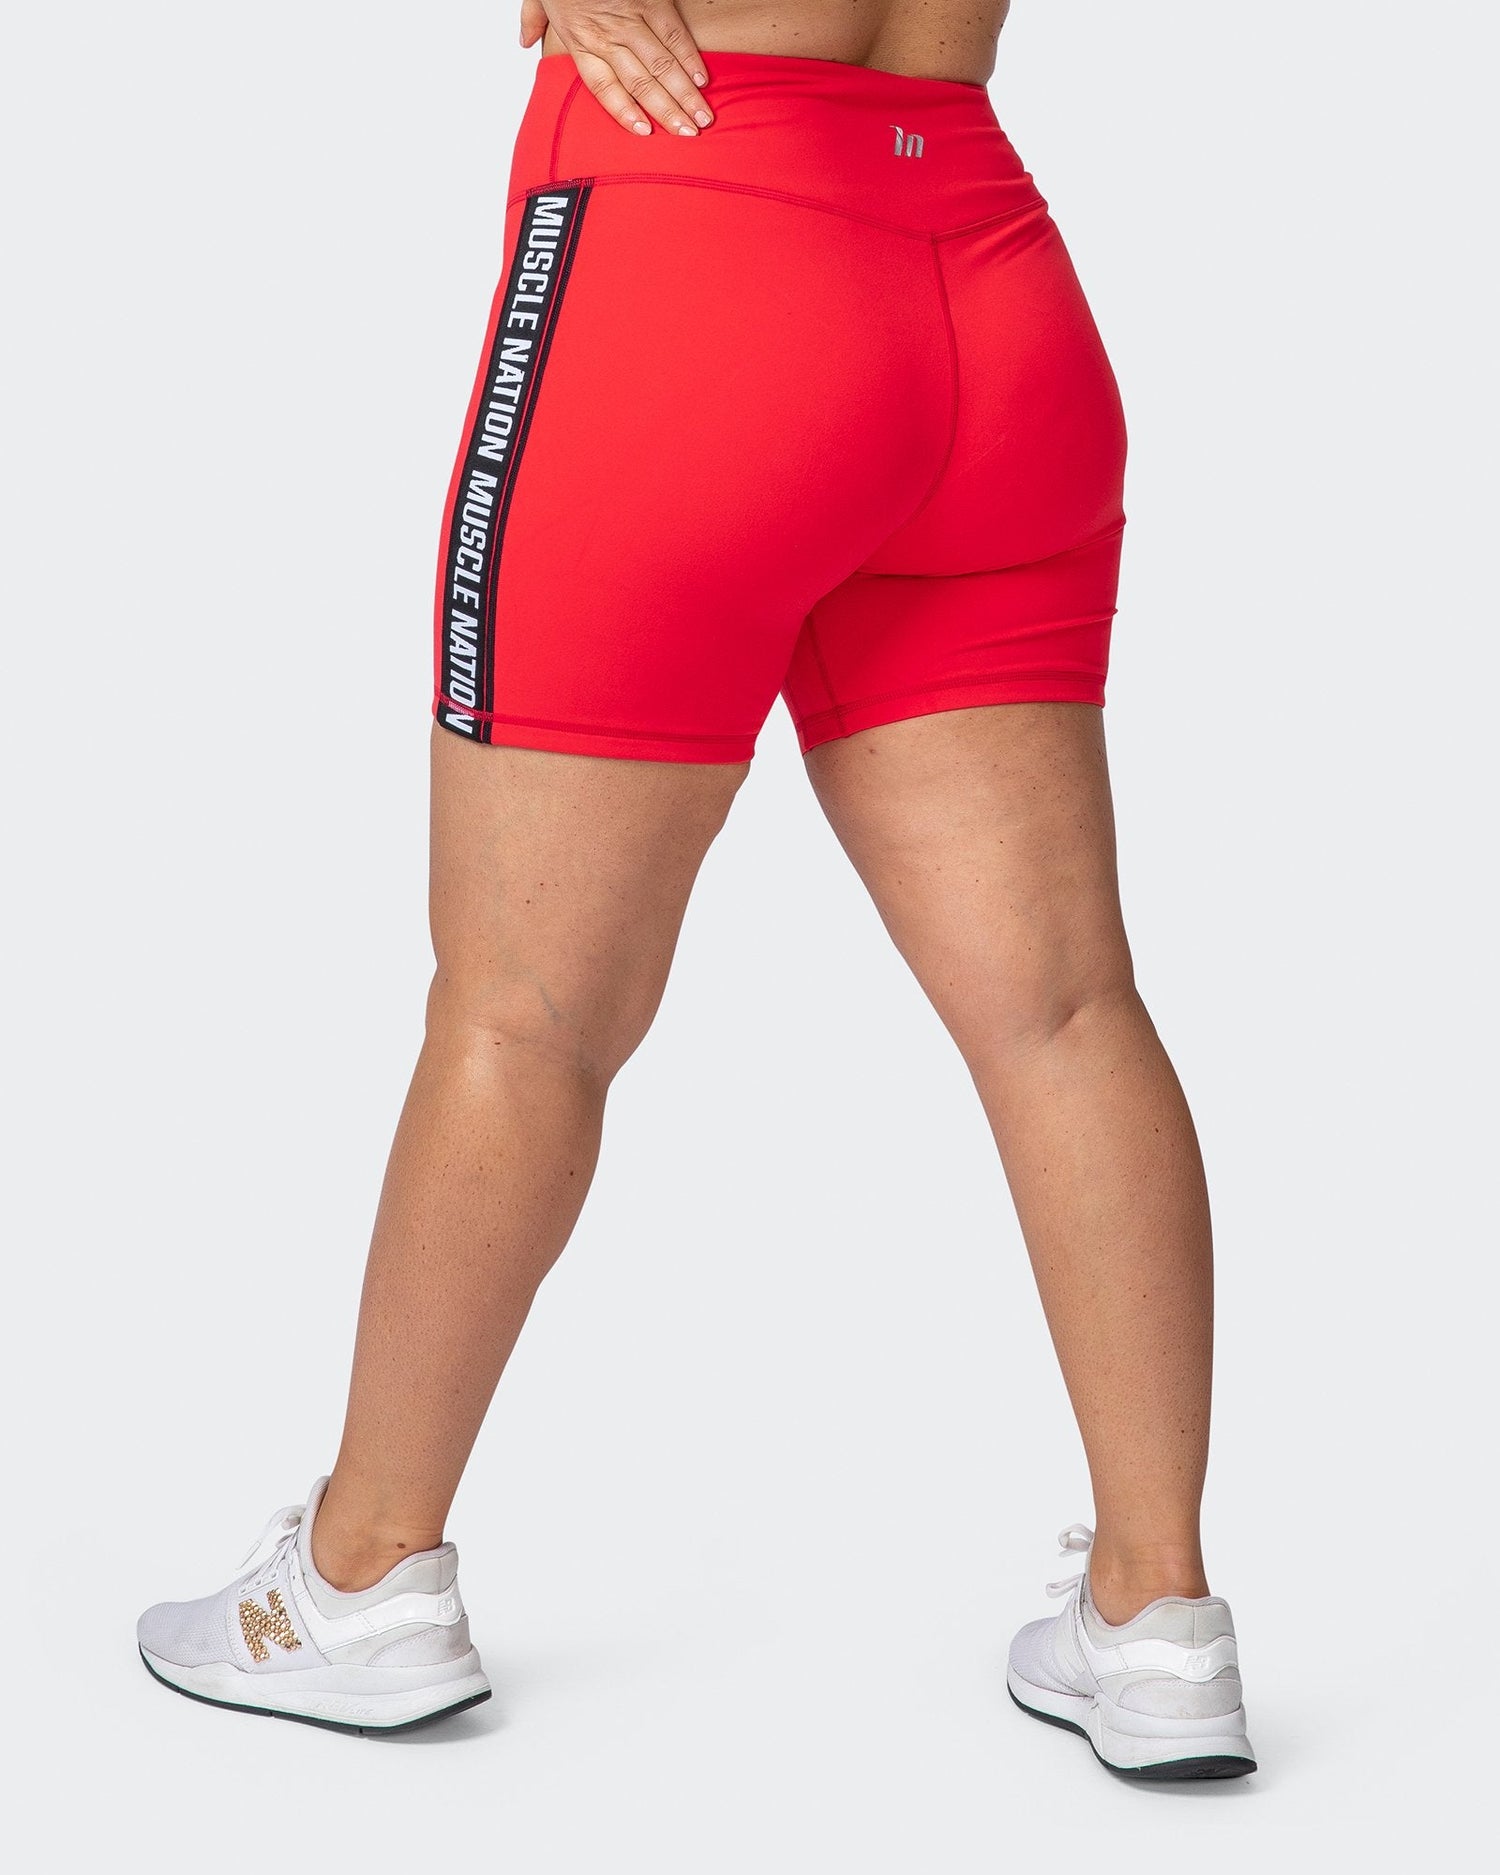 Dynamic Bike Shorts - Hot Red